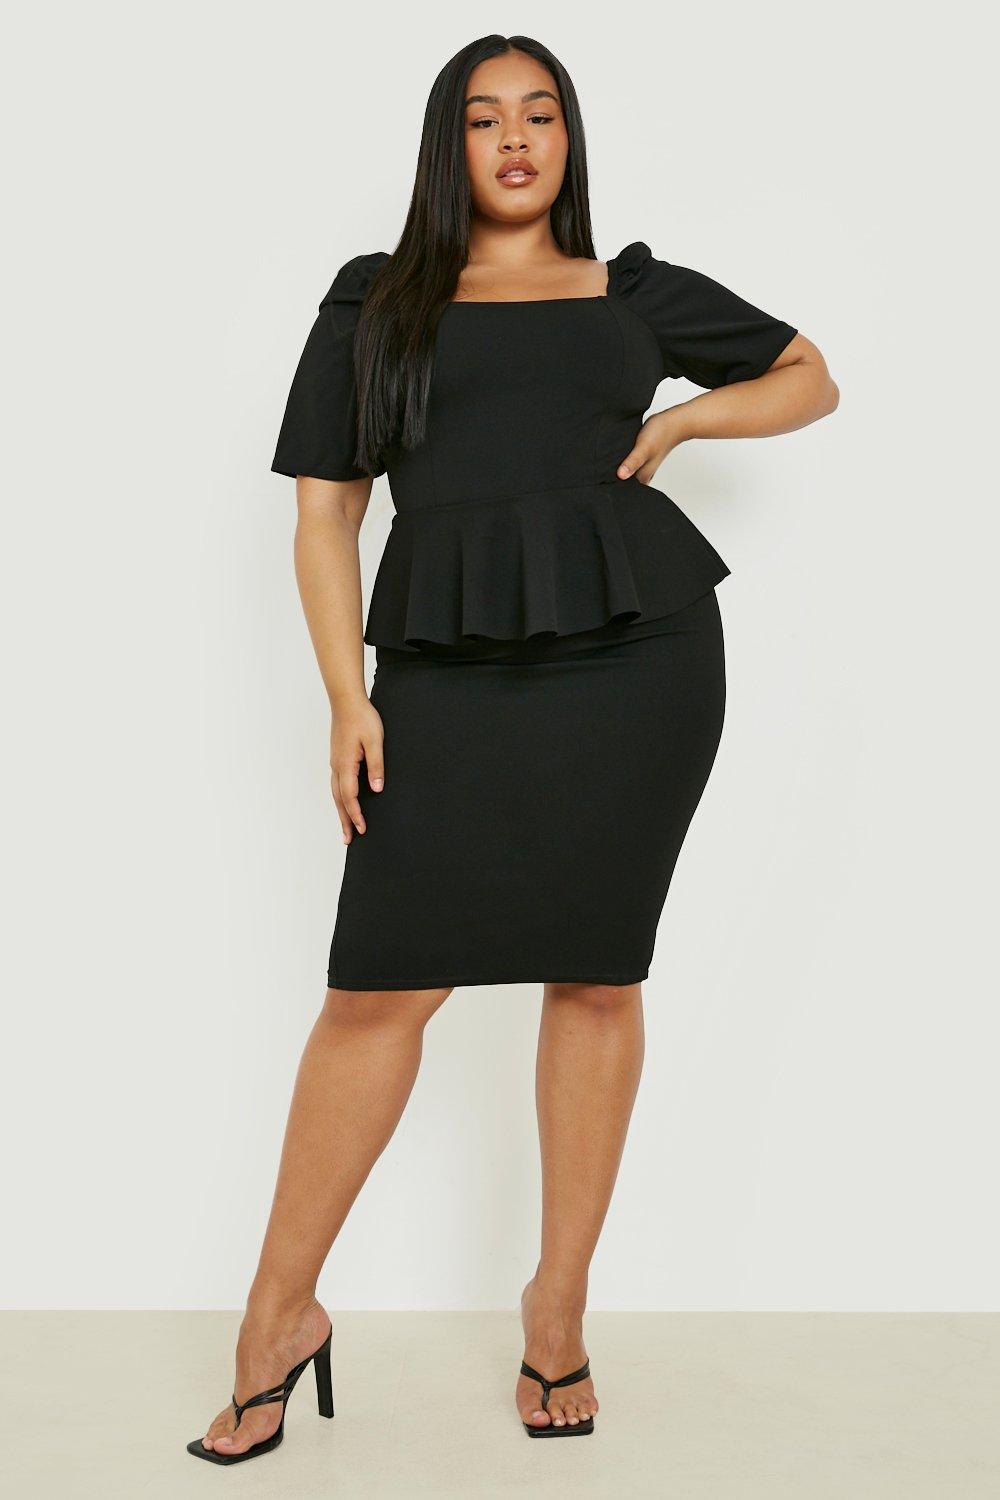 Black Peplum Dress Plus Size